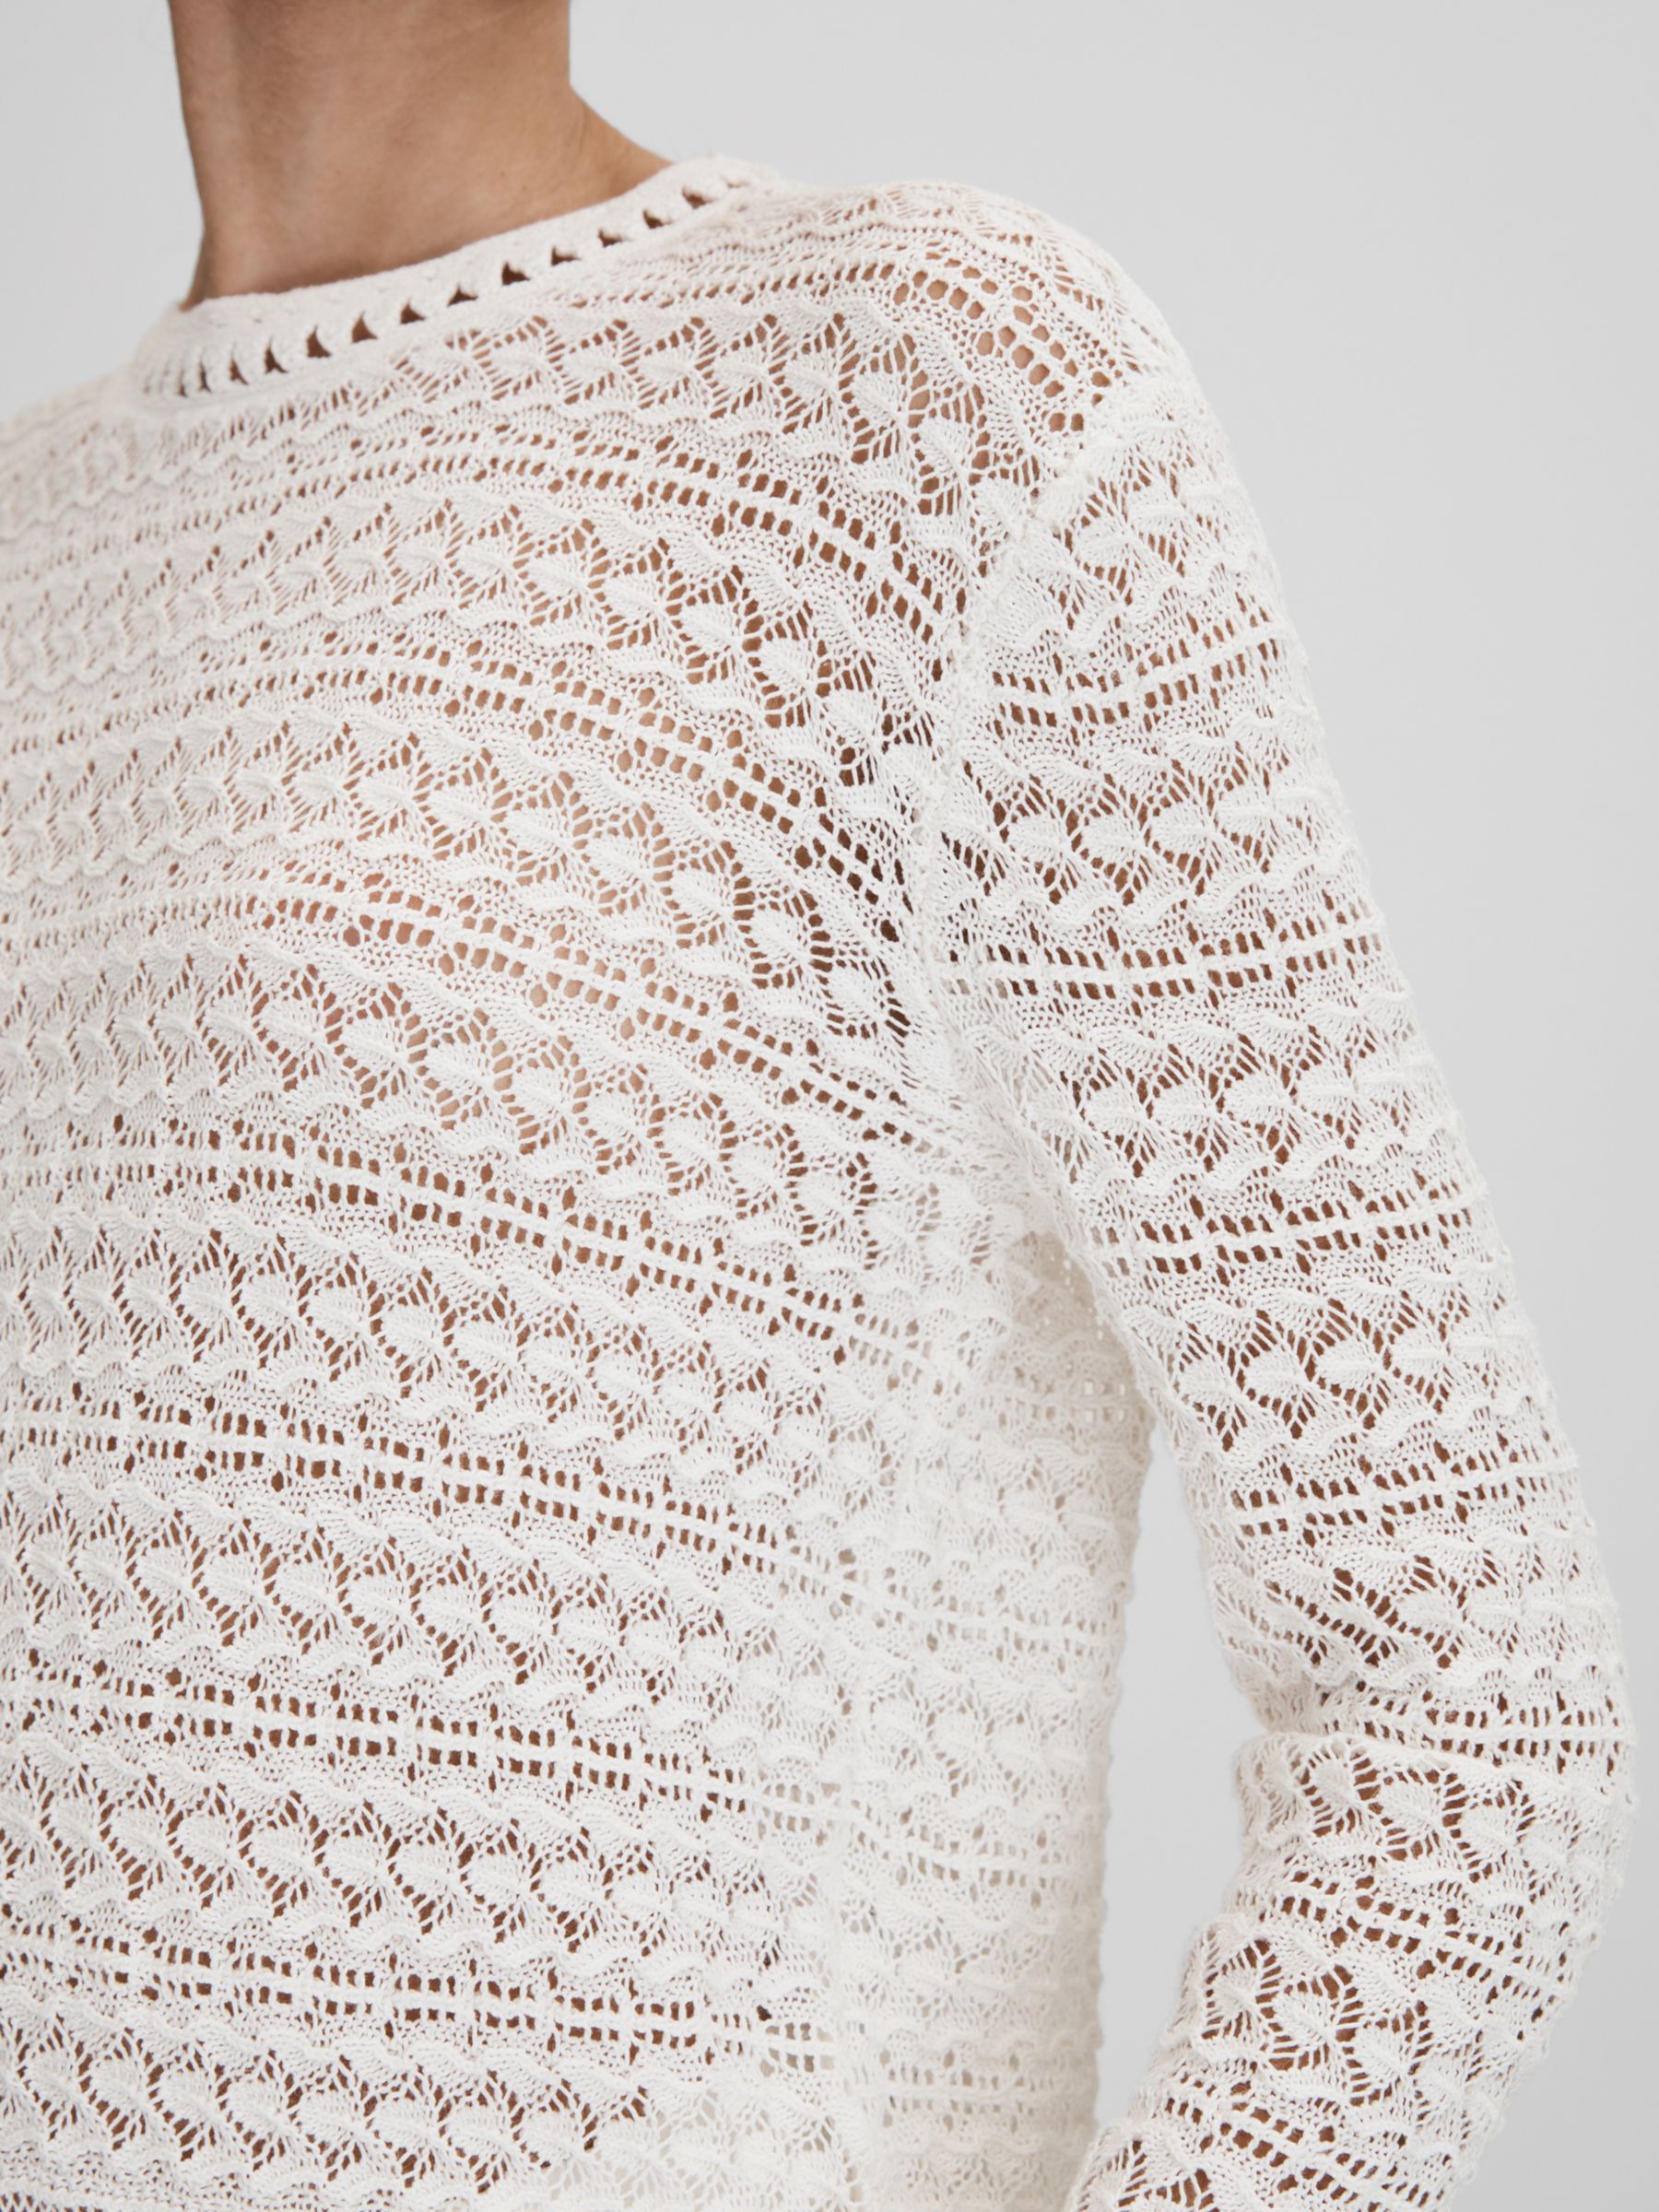 Reiss Sim Long Sleeve Crochet Top, White, XS